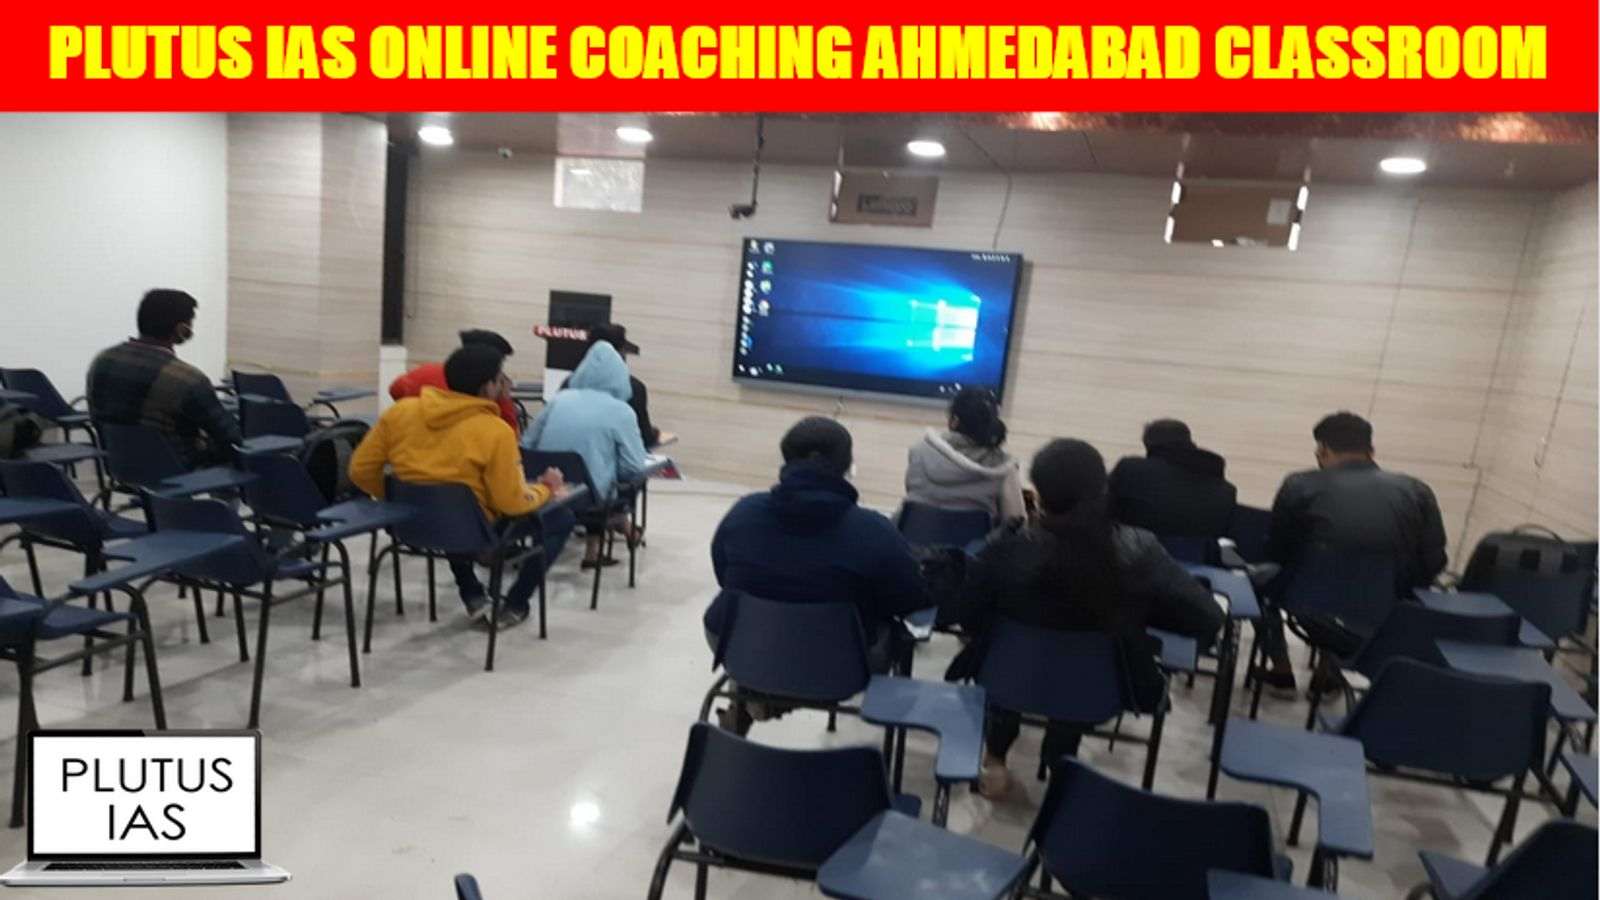 Plutus IAS Online Coaching Ahmedabad Class Room